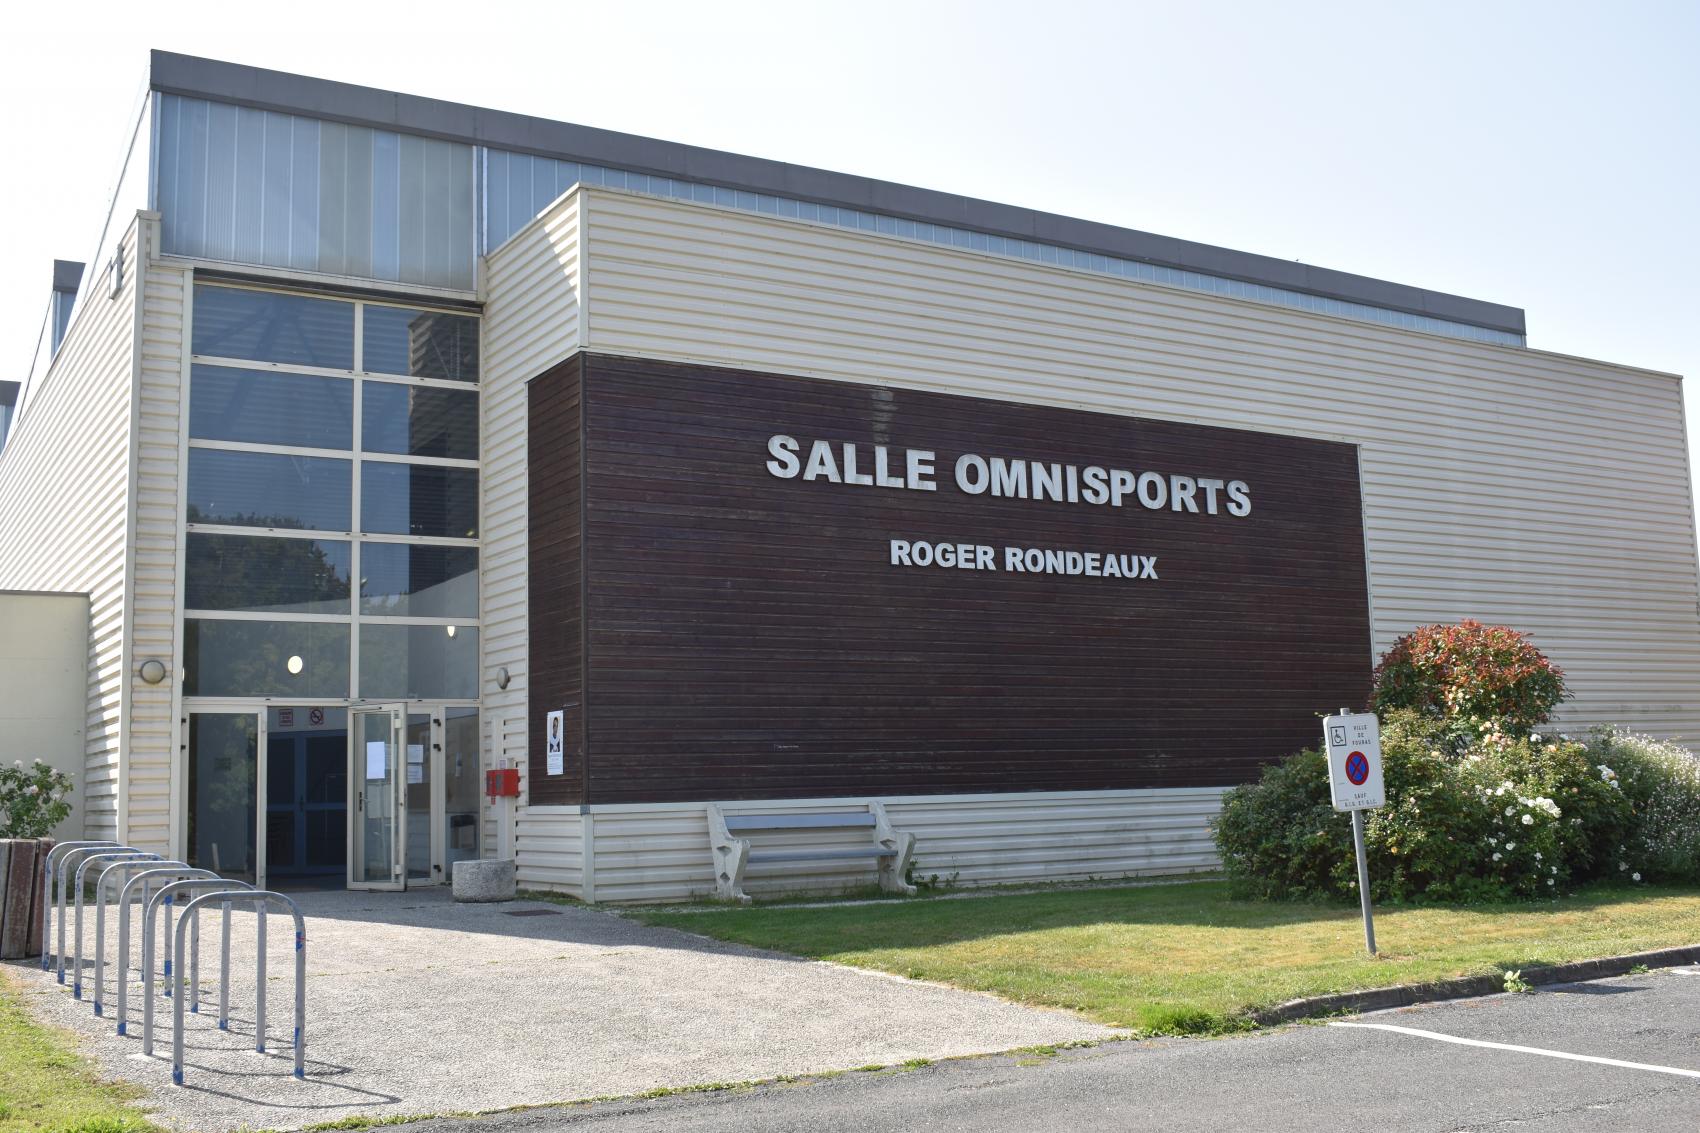 Salle omnisports Roger Rondeaux